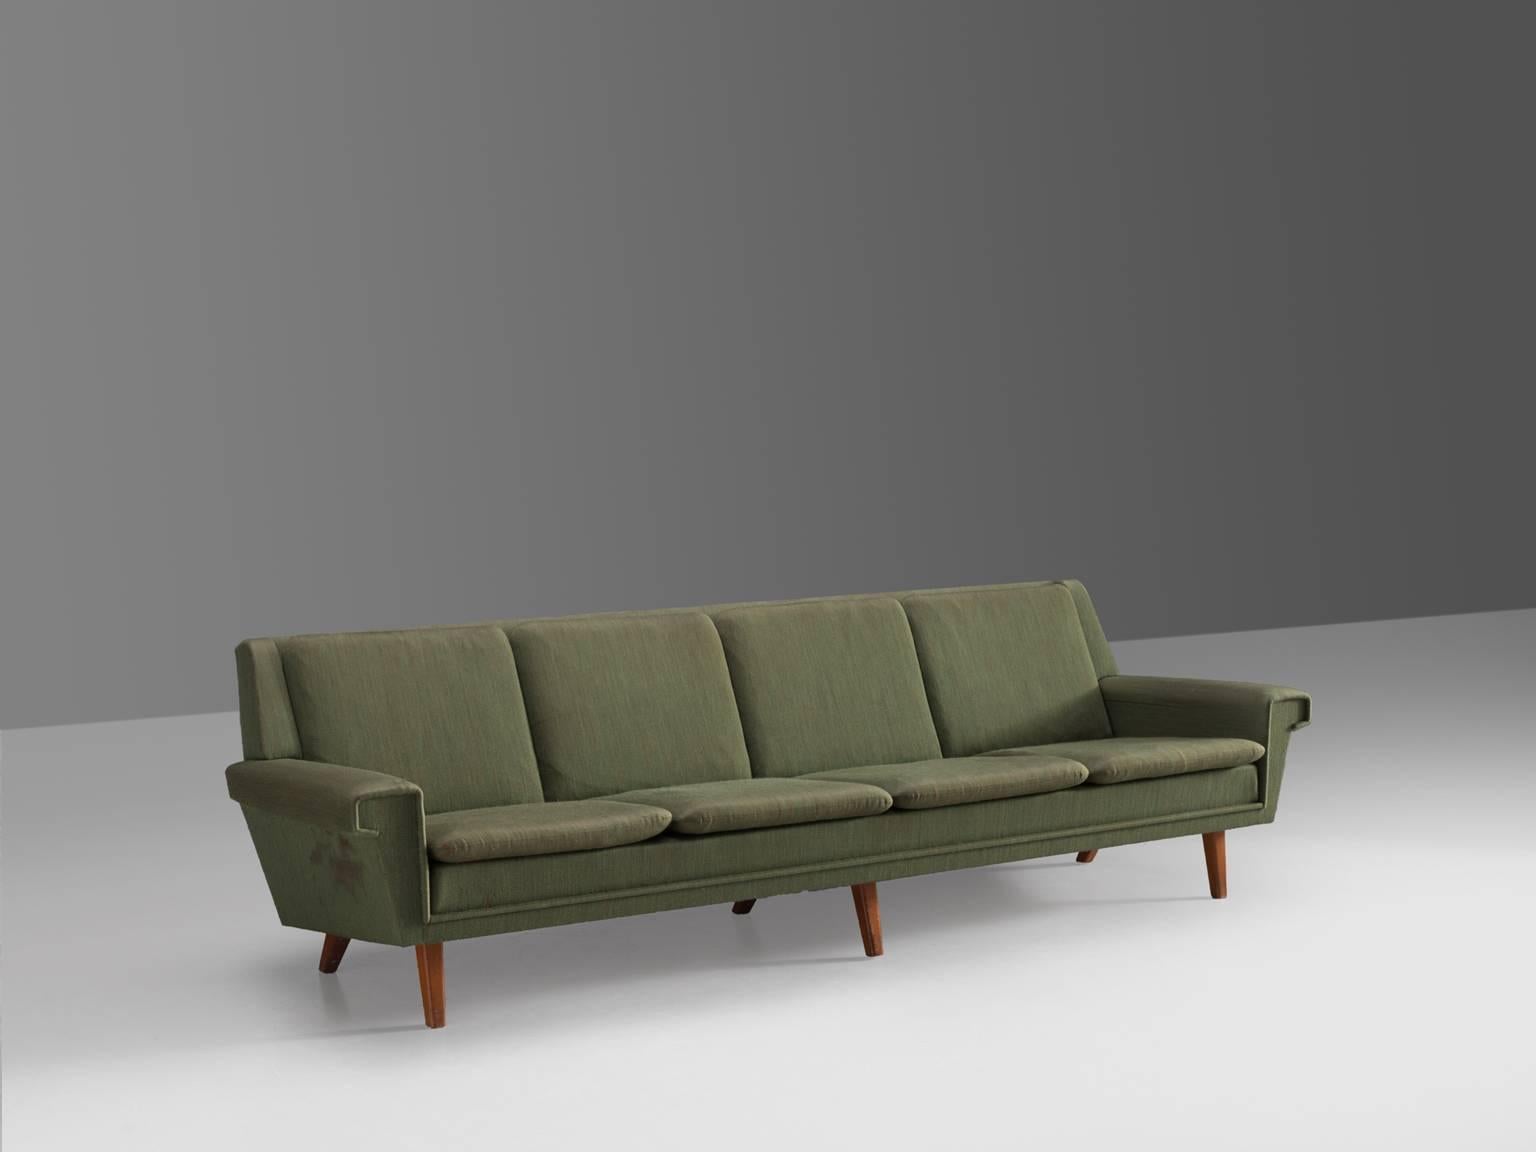 Scandinavian Modern Danish Four-Seat Sofa in Original Green Fabric, 1950s